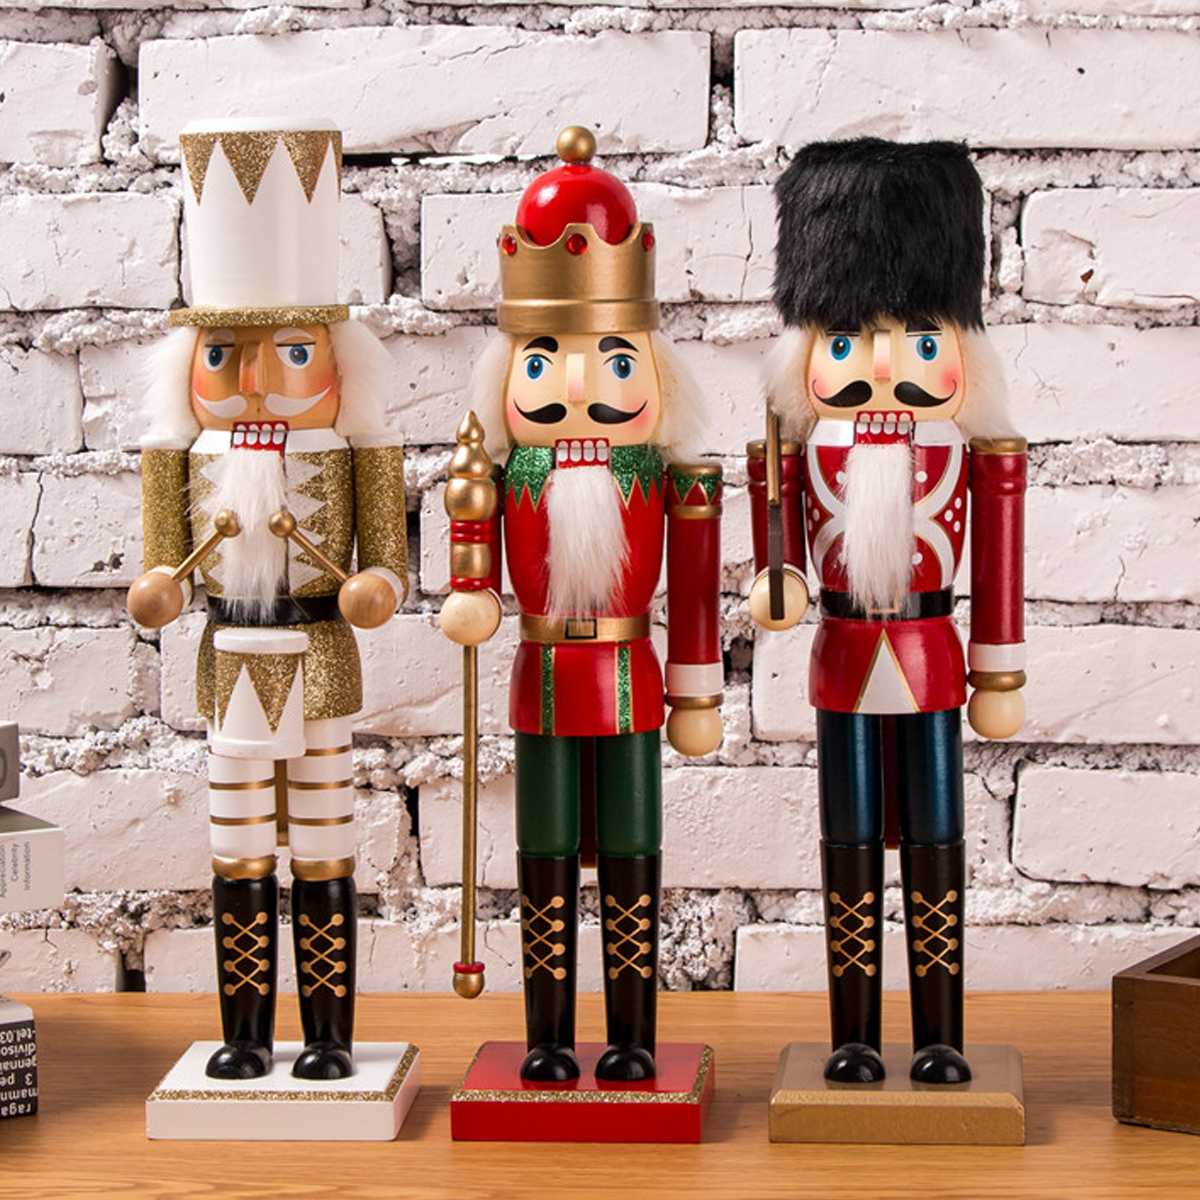 35cm-Wooden-Nutcracker-Doll-Soldier-Vintage-Handcraft-Decoration-Christmas-Gifts-1398445-1